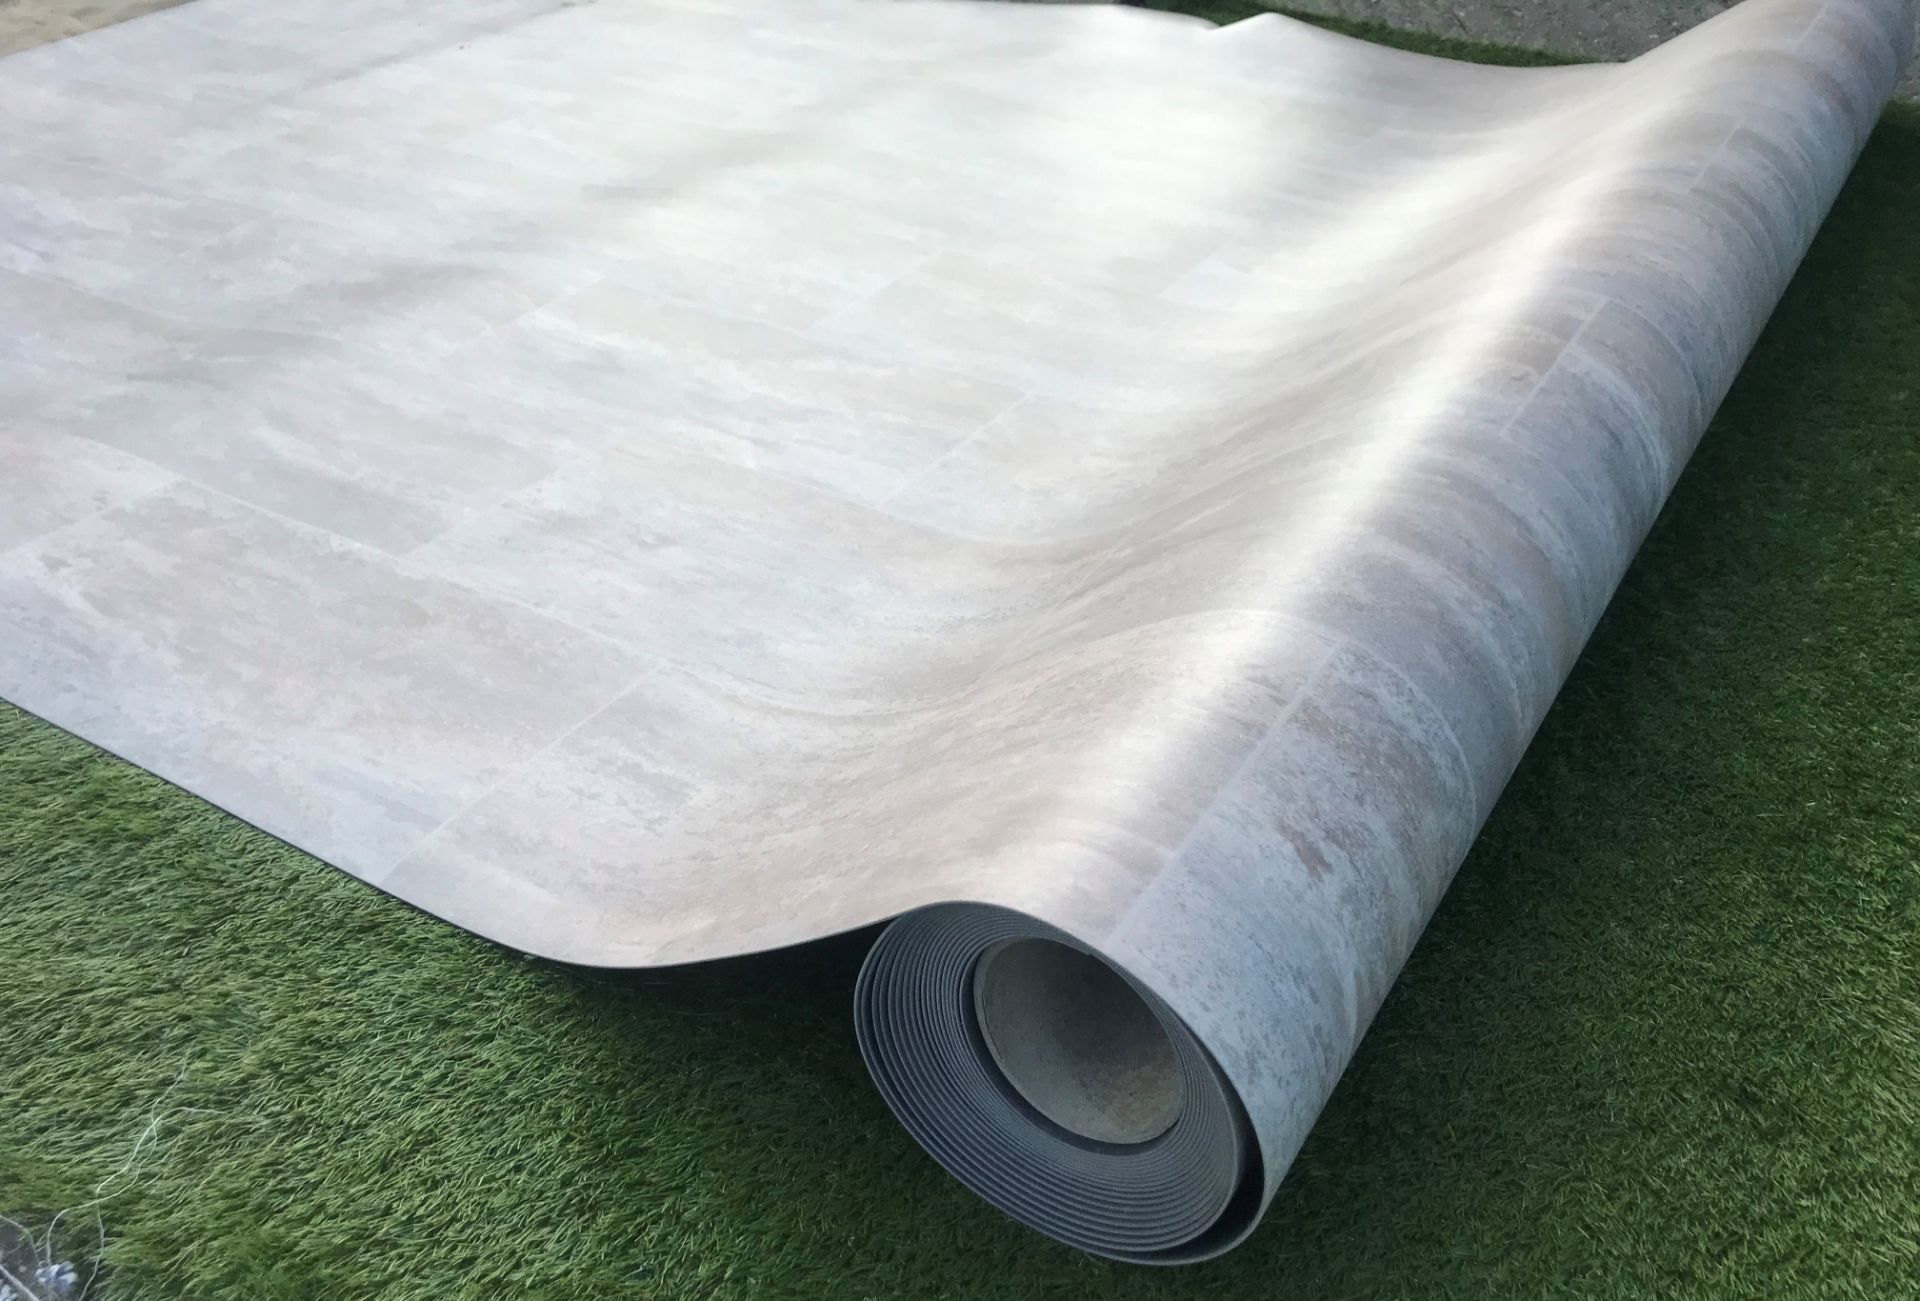 1 x GERFLOR Tarkett Commercial Safety Flooring In Melbourne Tile Design - 20X2 Meter Roll - Ref: - Image 2 of 4